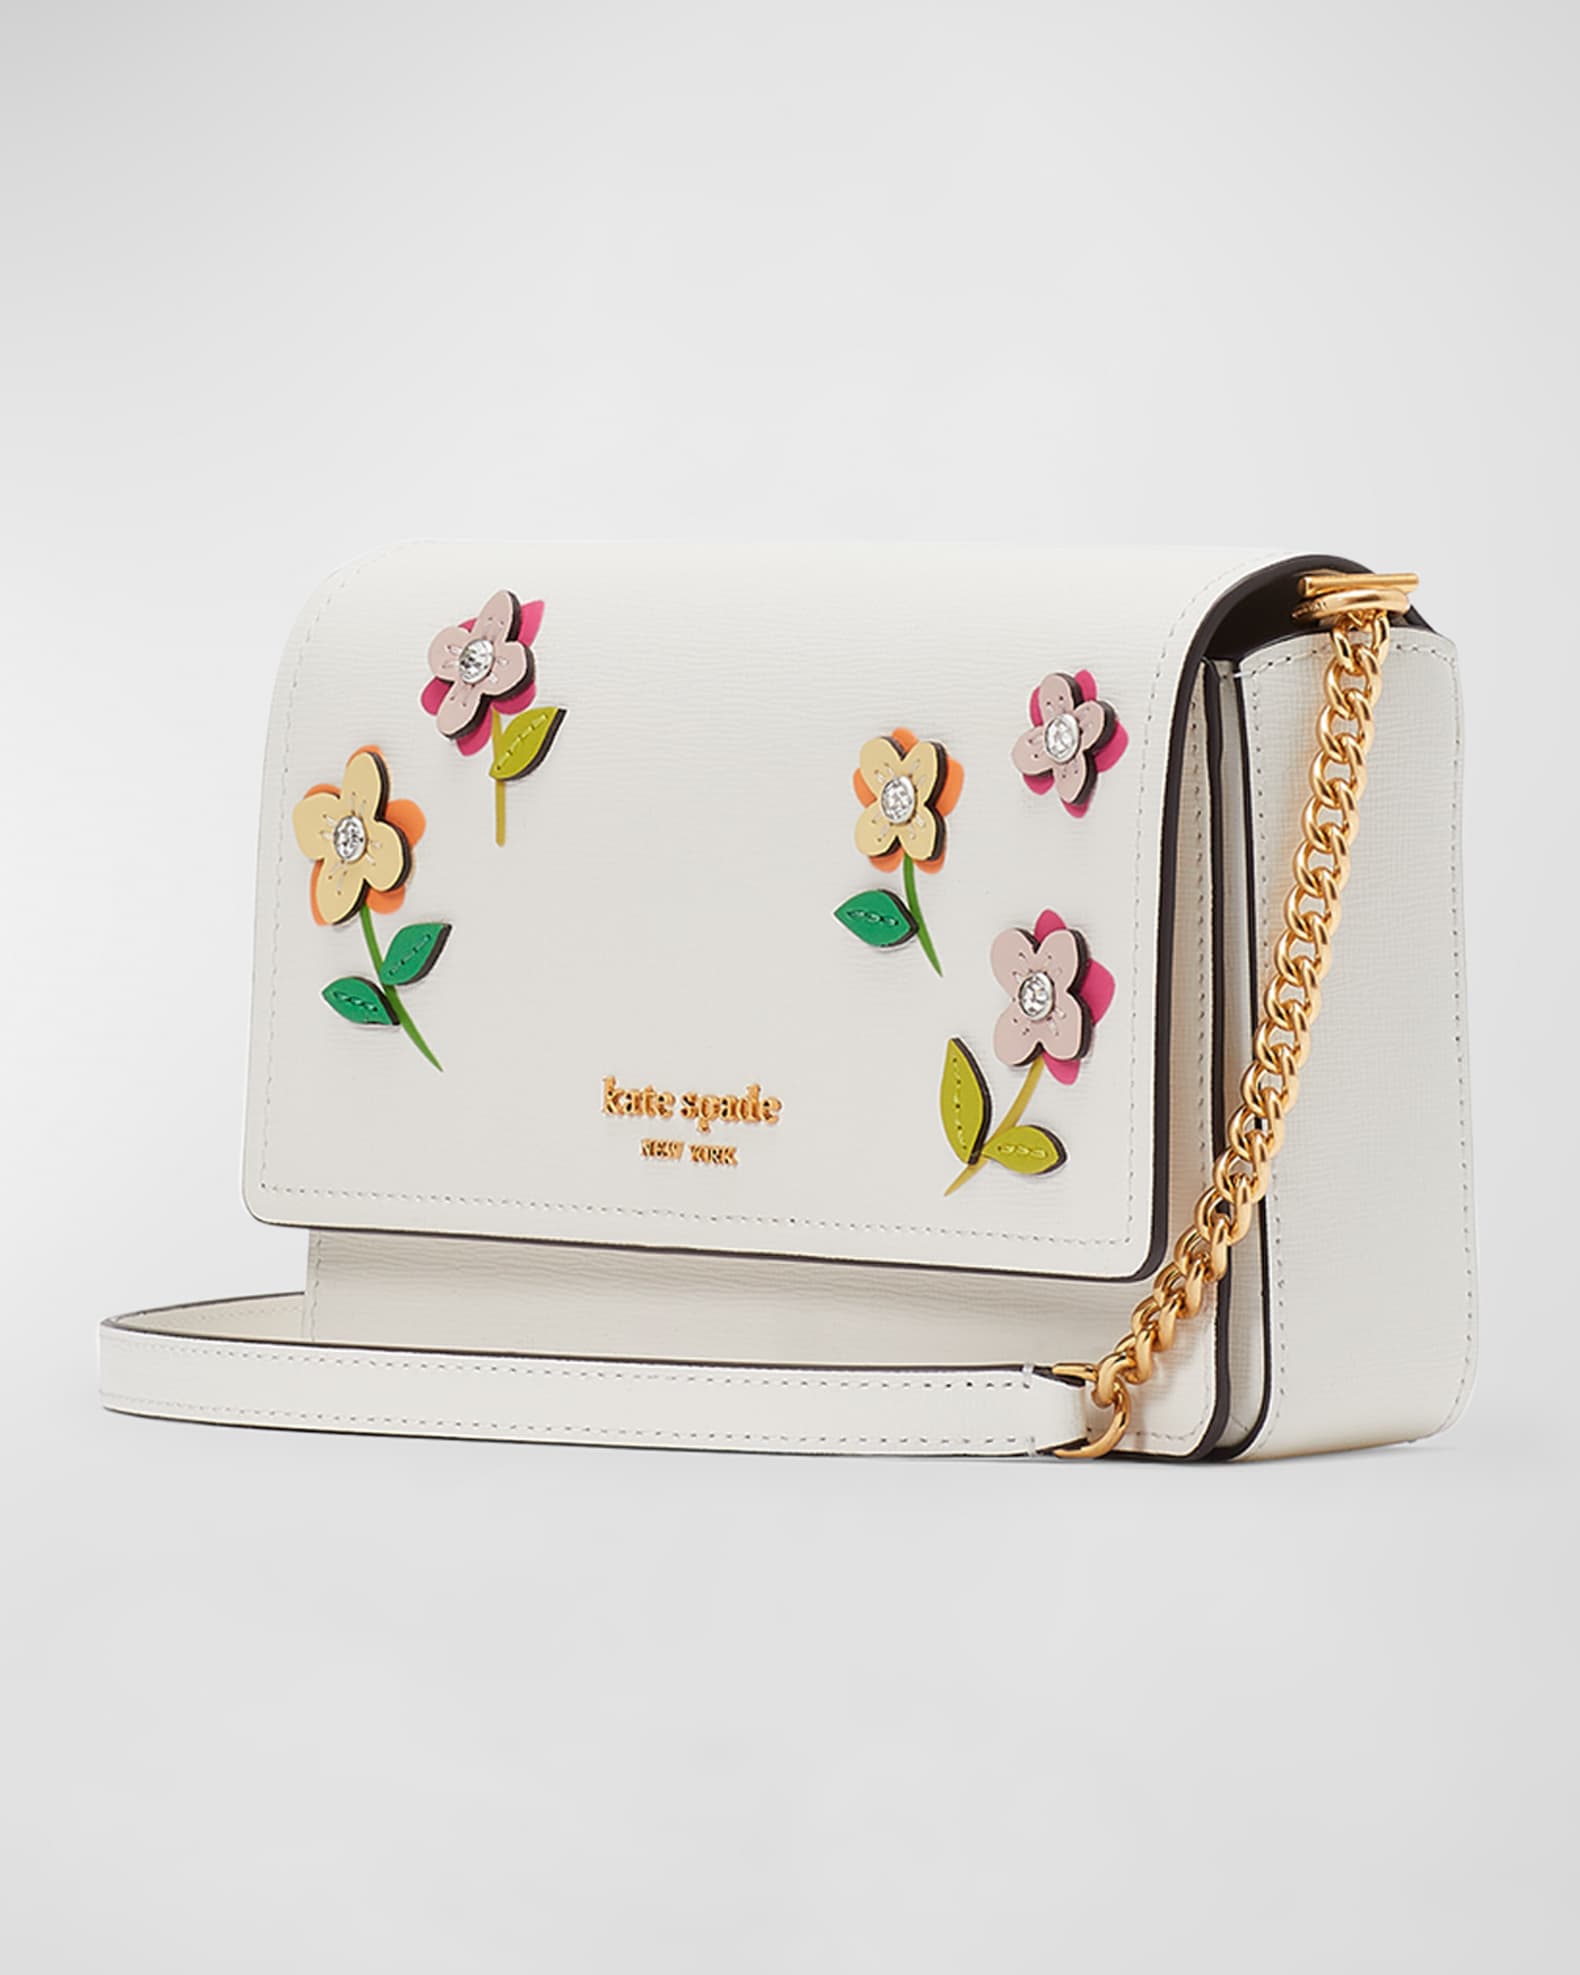 kate spade new york in bloom flower leather crossbody bag | Neiman Marcus